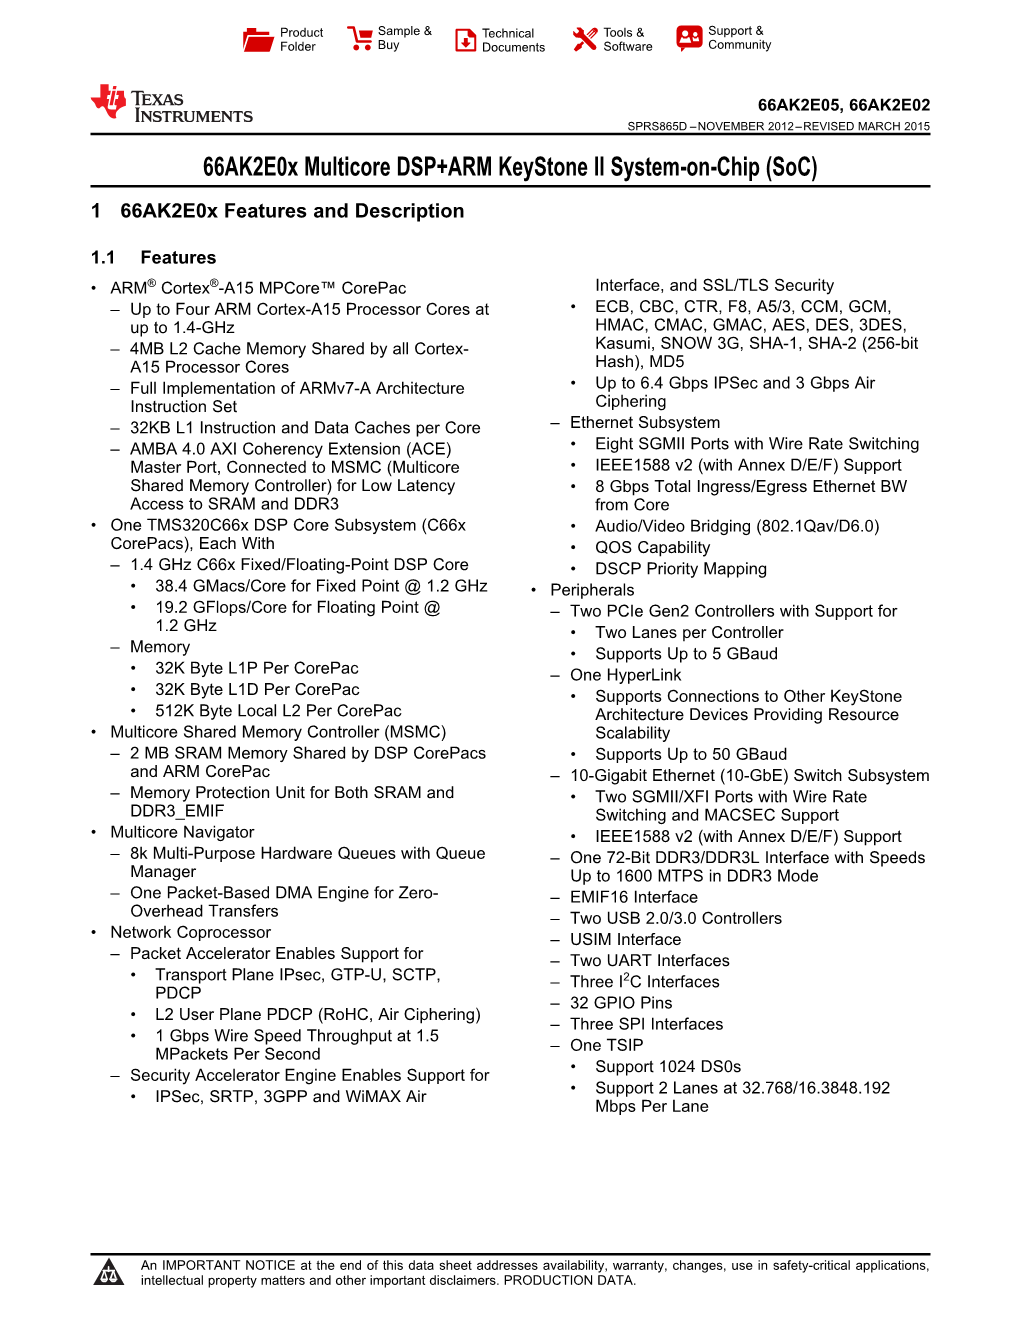 66AK2E05/02 Multicore DSP+ARM Keystone II System-On-Chip (Soc)